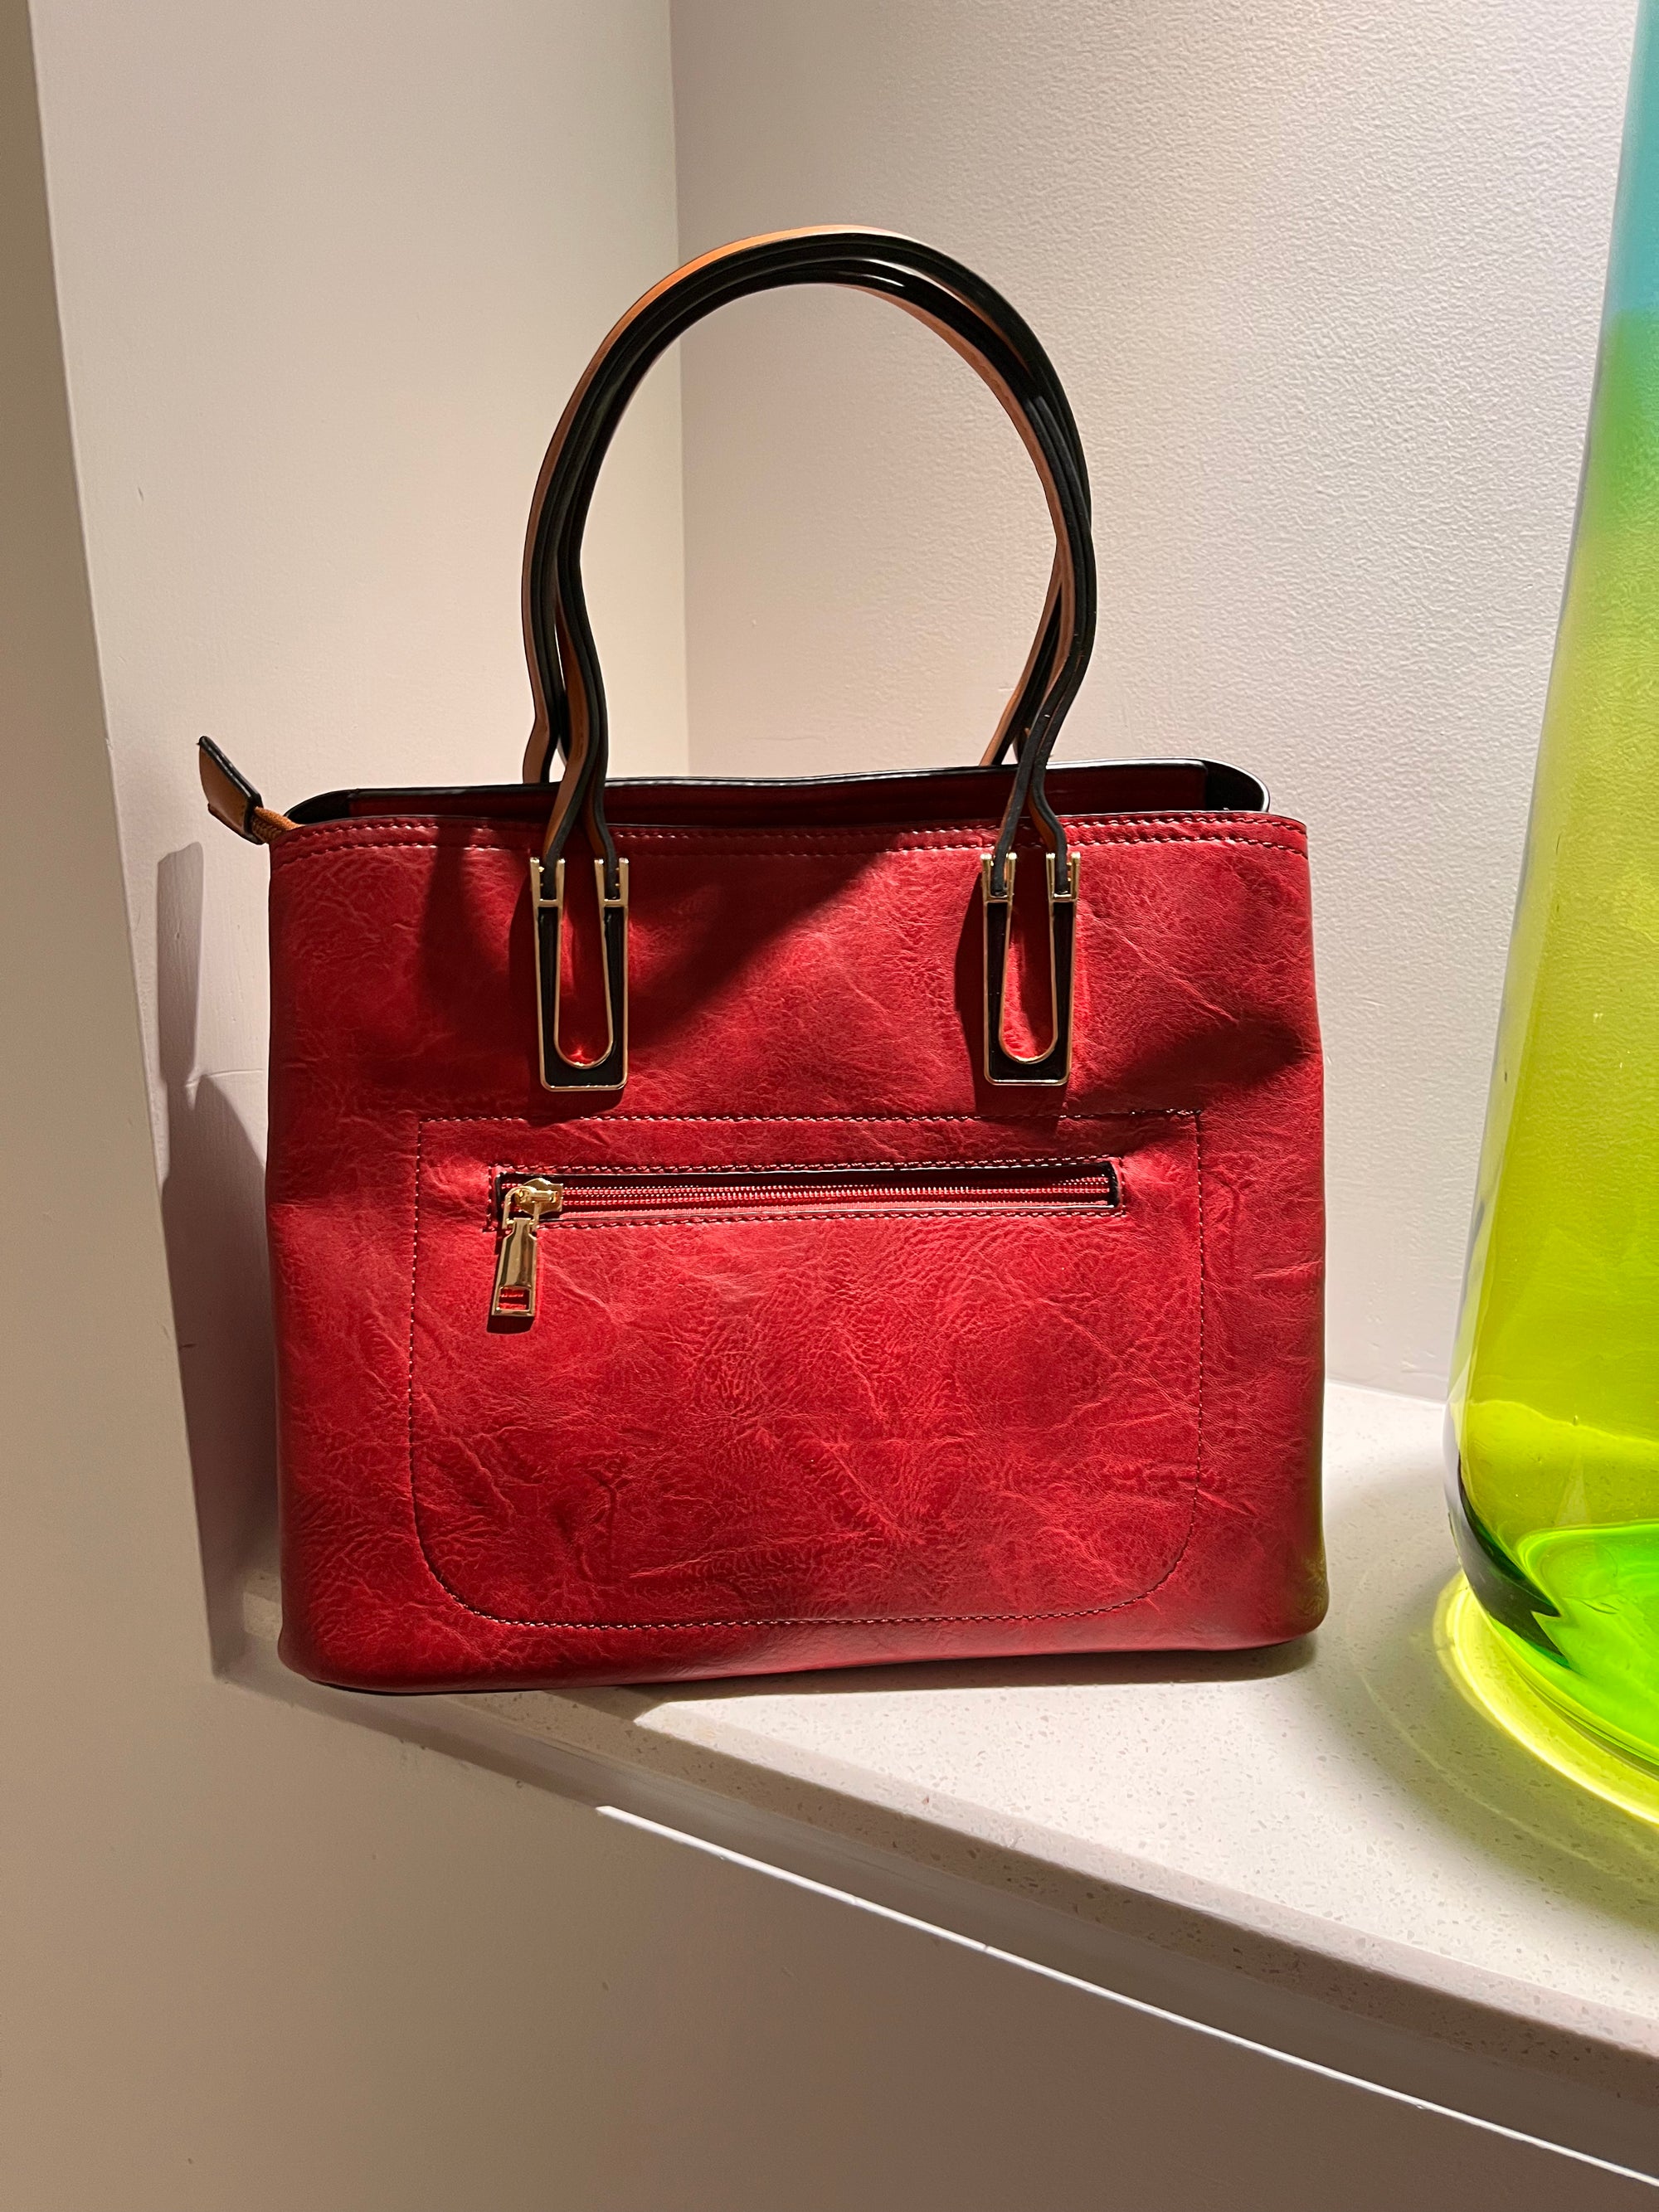 The Chelsea Handbag